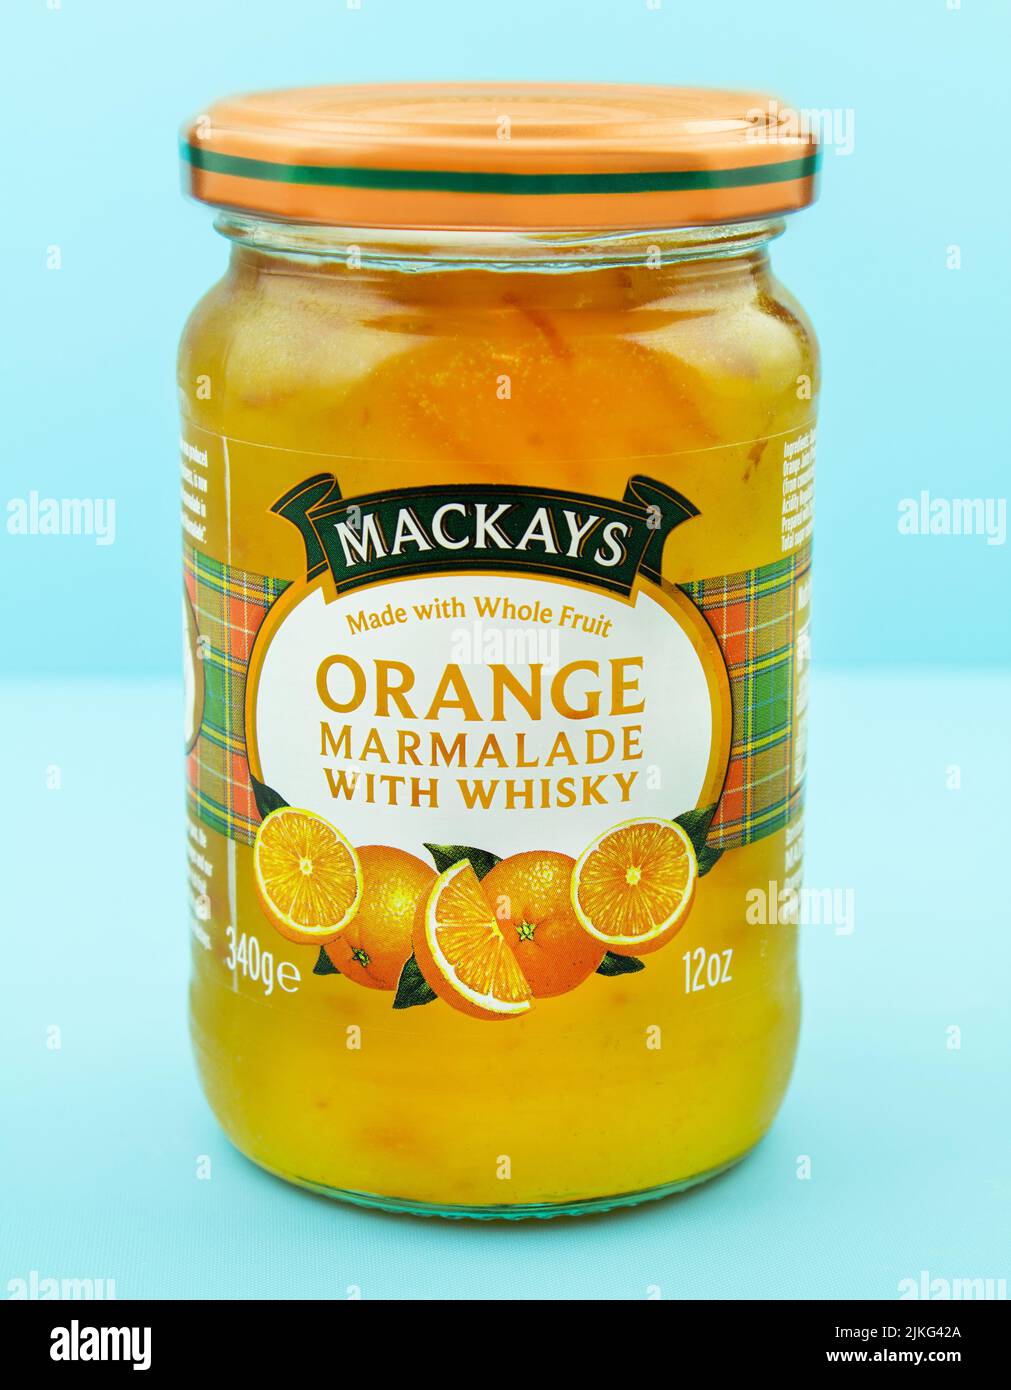 Mermelada de naranja Mackays con whisky Foto de stock